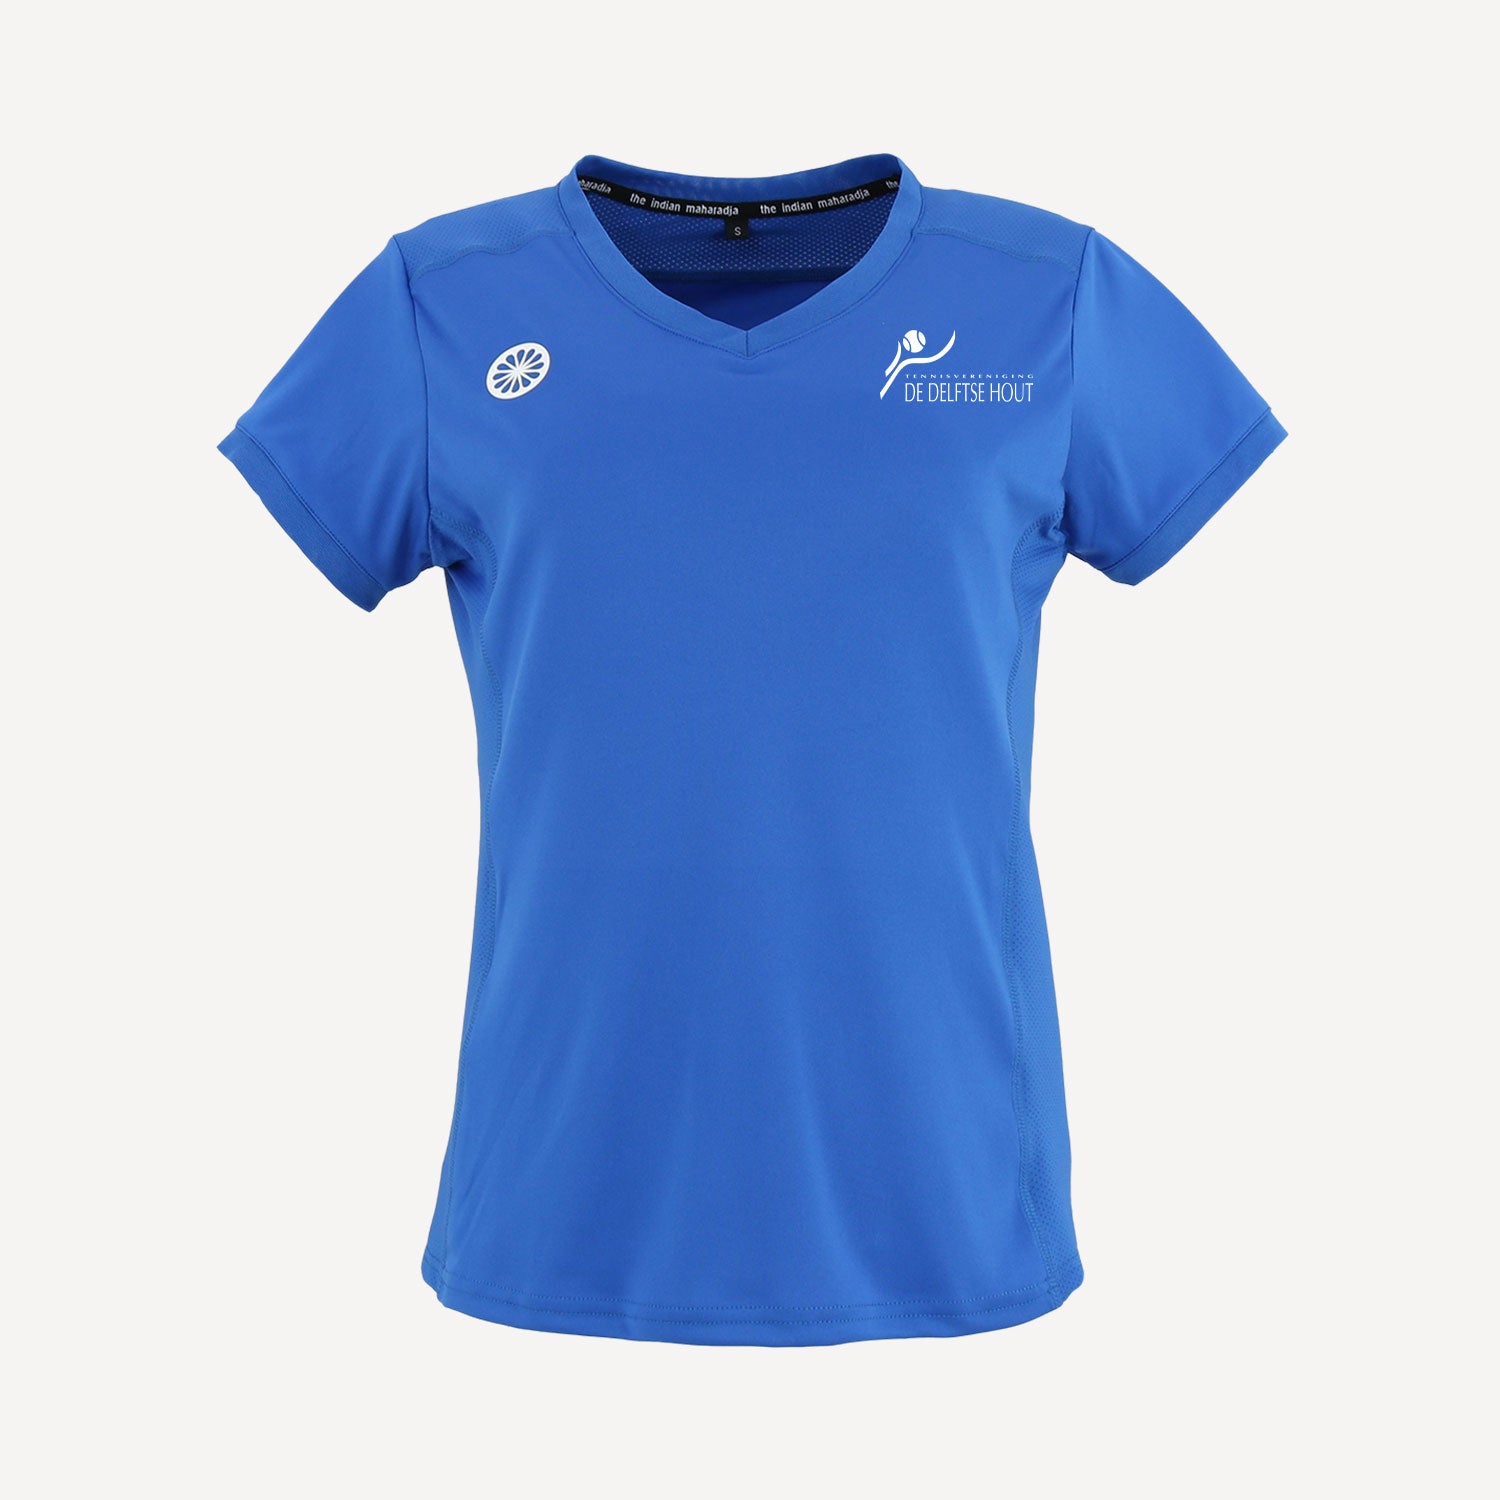 The Indian Maharadja Kadiri Women's Tennis Shirt - De Delftse Hout - Blue (1)